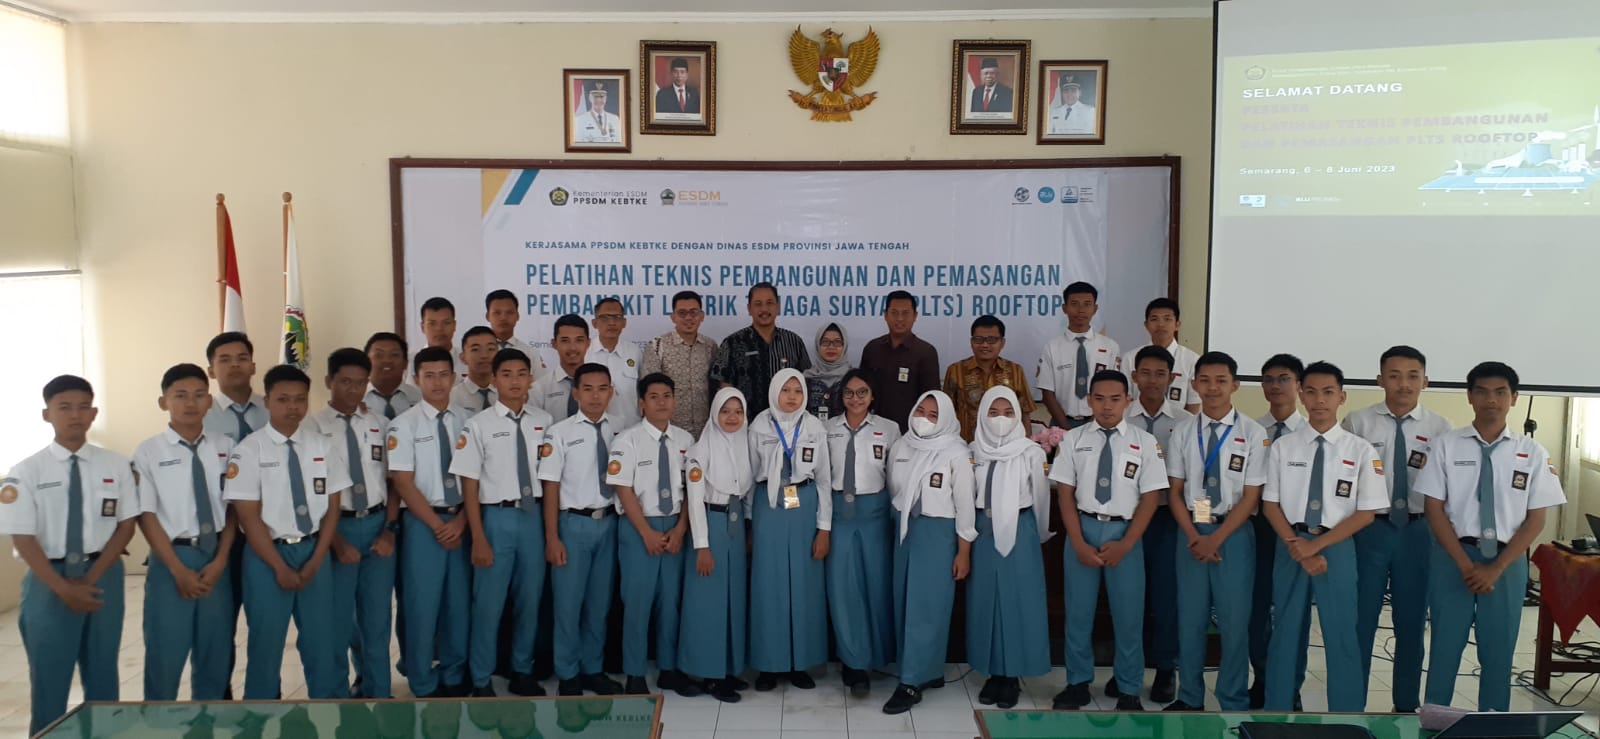 Bekerjasama Dinas ESDM Provinsi Jawa Tengah, PPSDM KEBTKE  Selenggarakan Pelatihan PLTS Rooftop